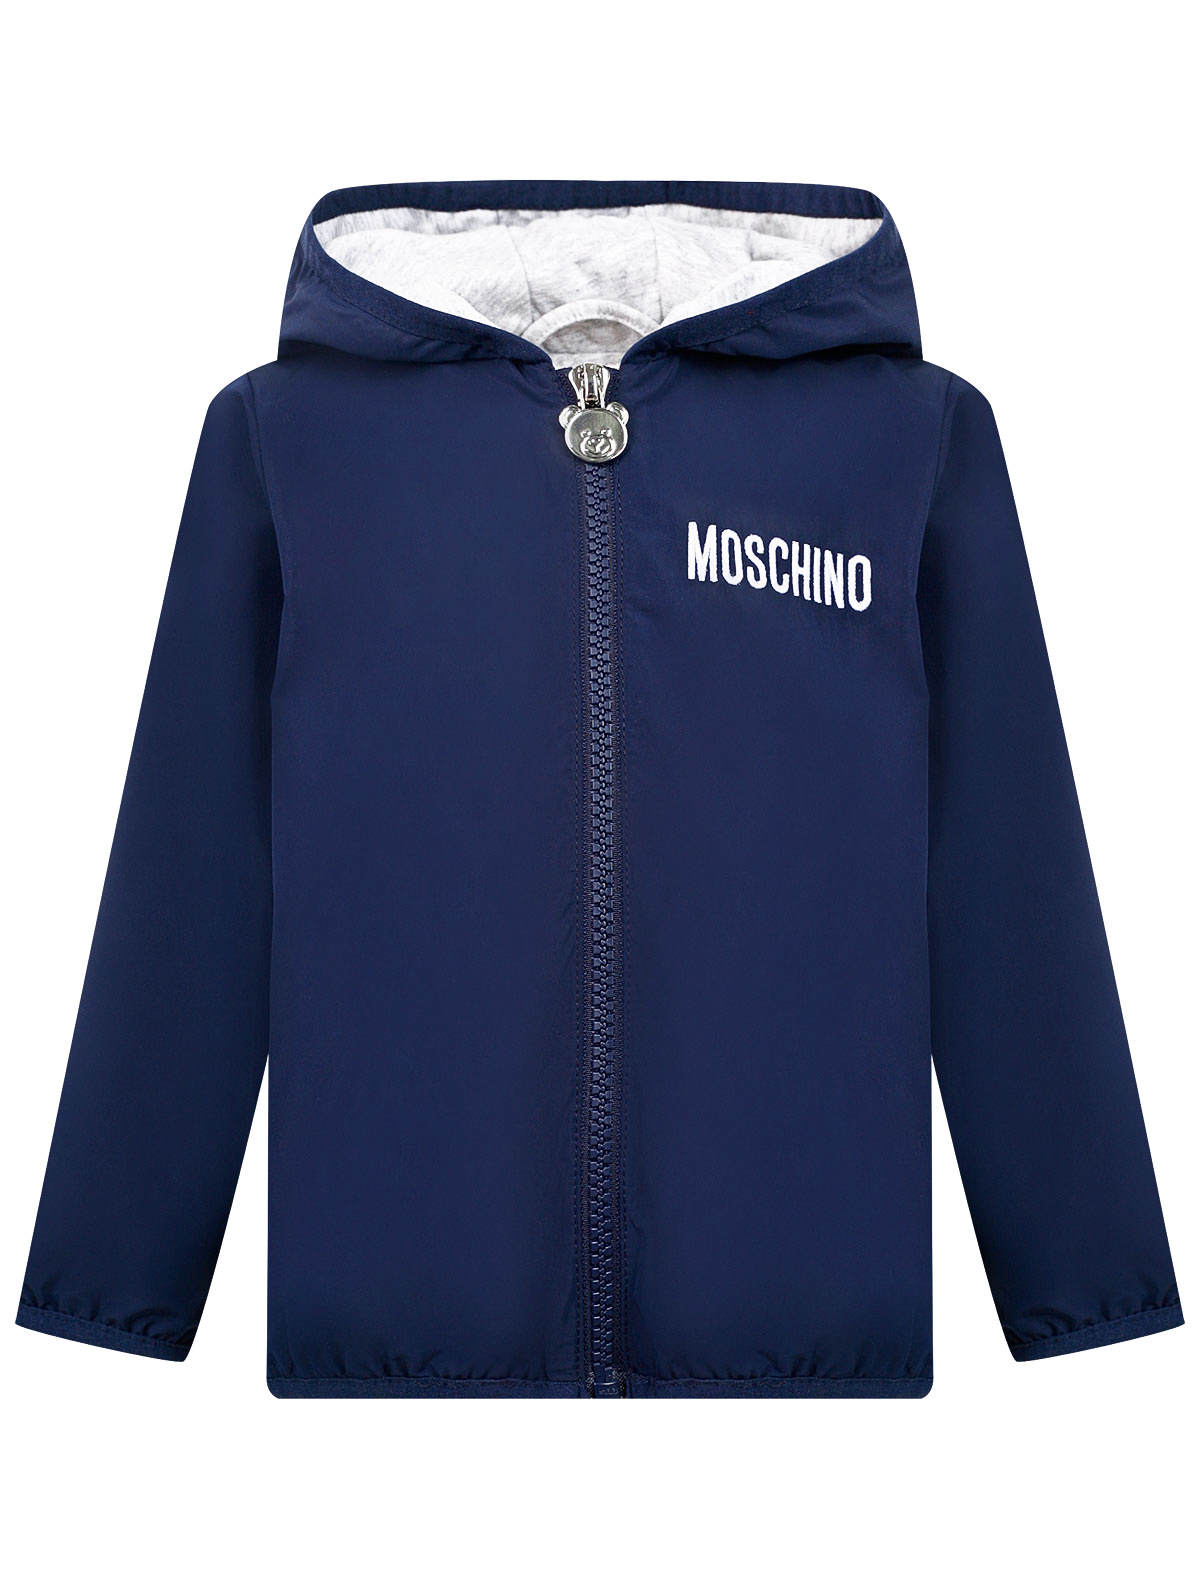 Куртка Moschino 2396213, цвет синий, размер 2 1074529270298 - фото 1